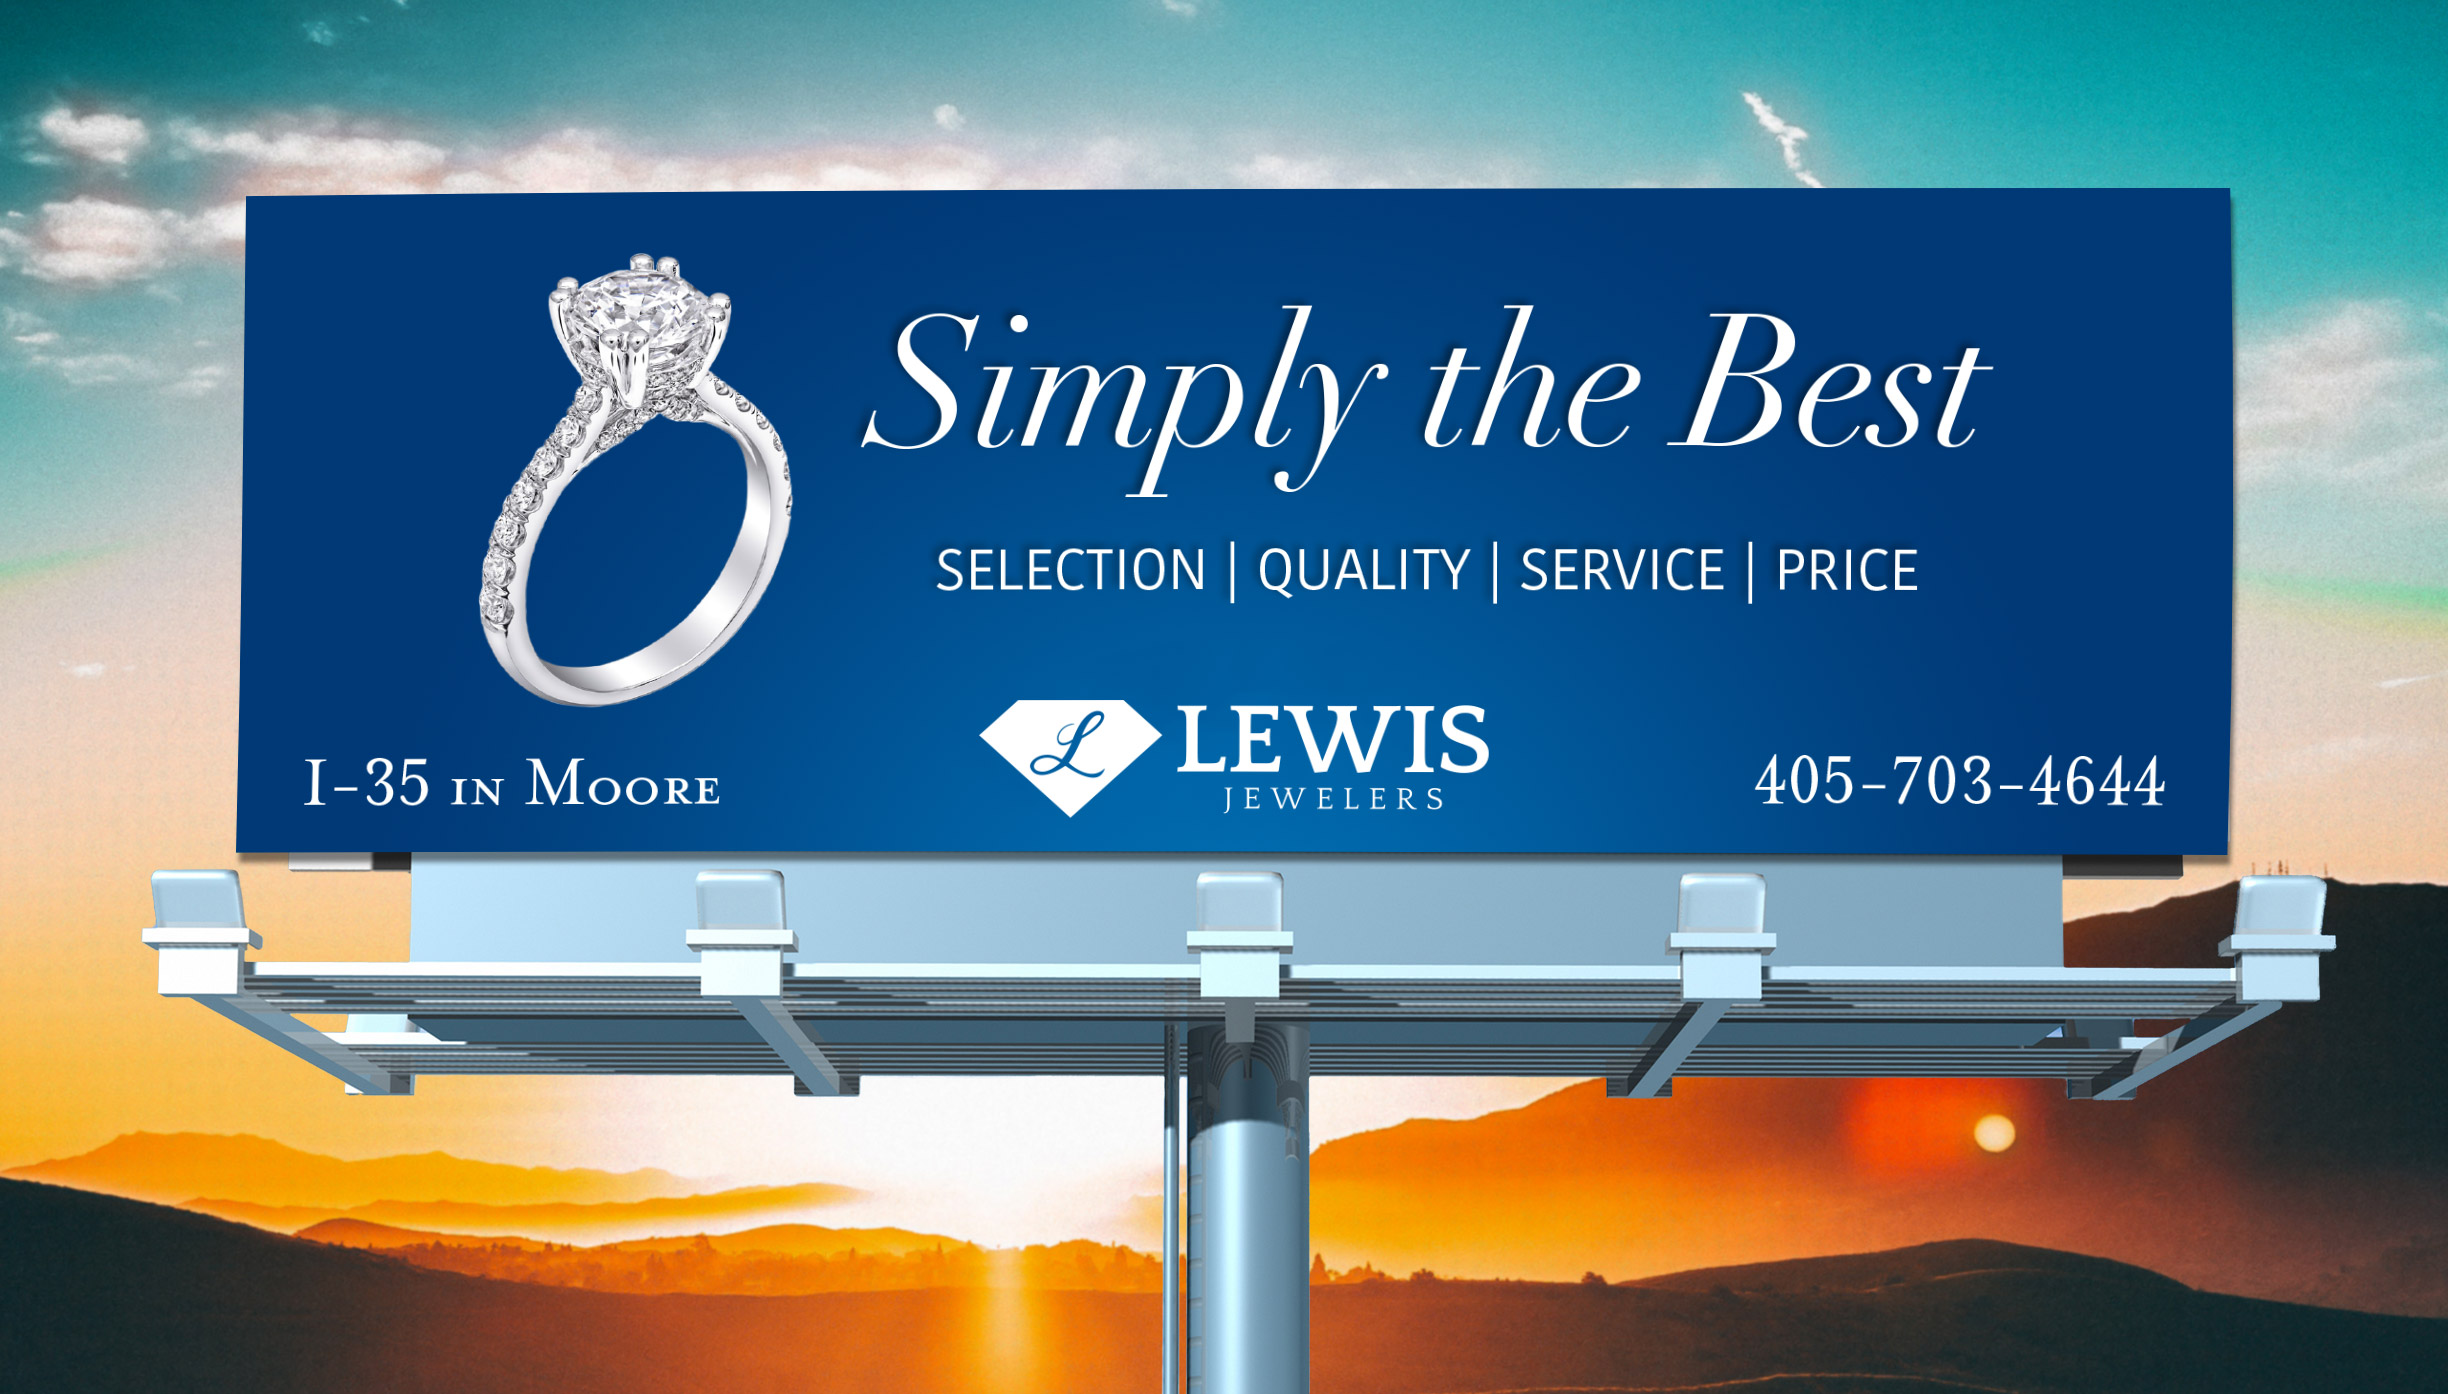 Lewis-Jewelers-Outdoor-Boards-SimplyTheBest.jpg